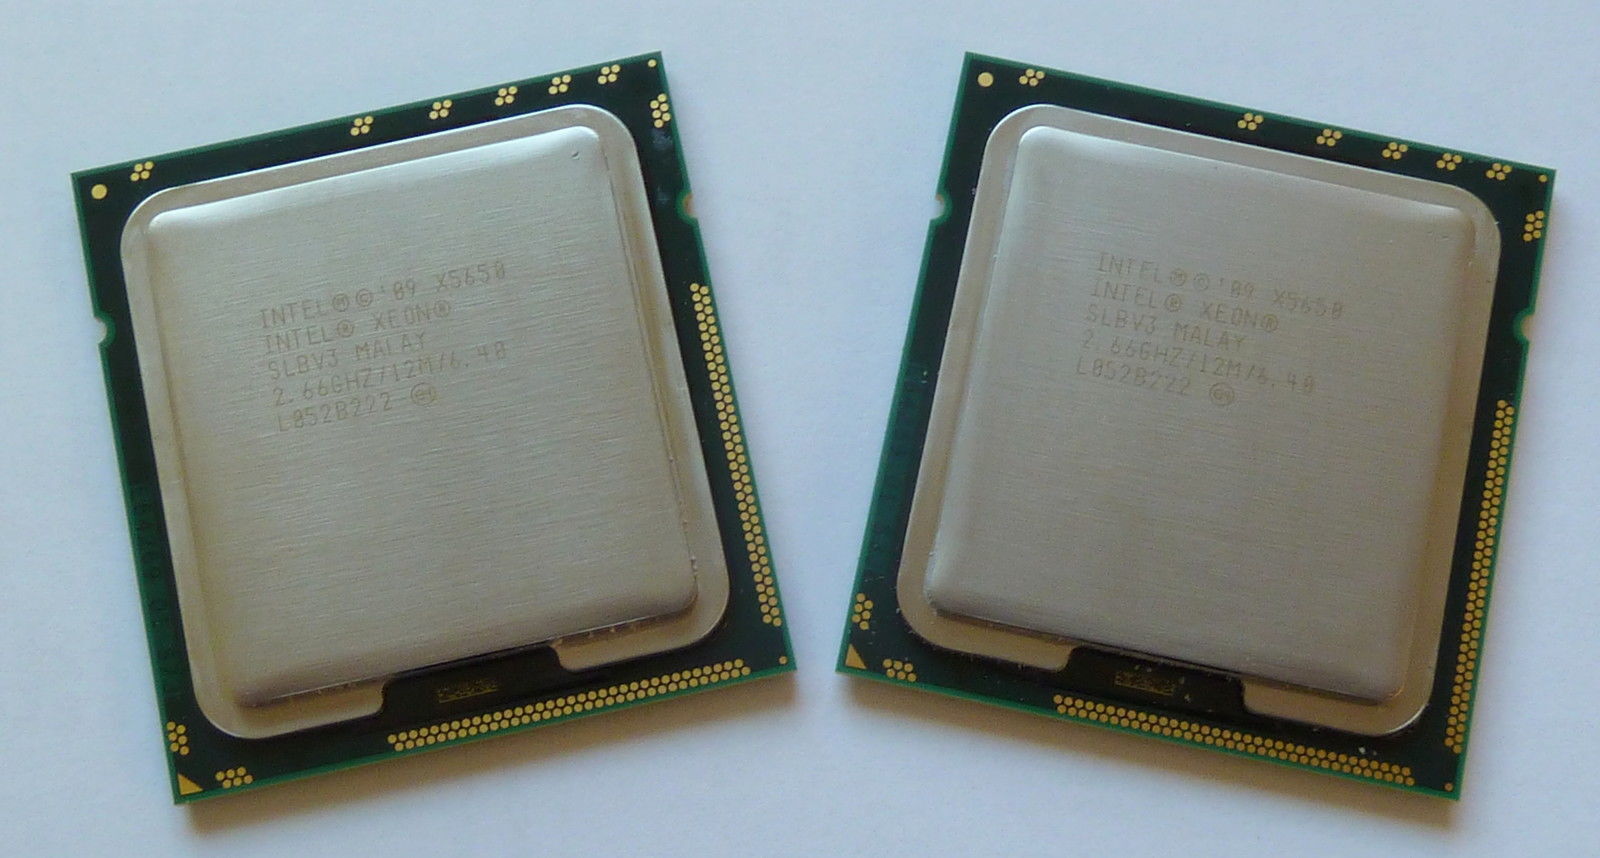 Matching pair Intel Xeon X5660 X5670 X5675 X5680 X5690 LGA1366 CPU Processor